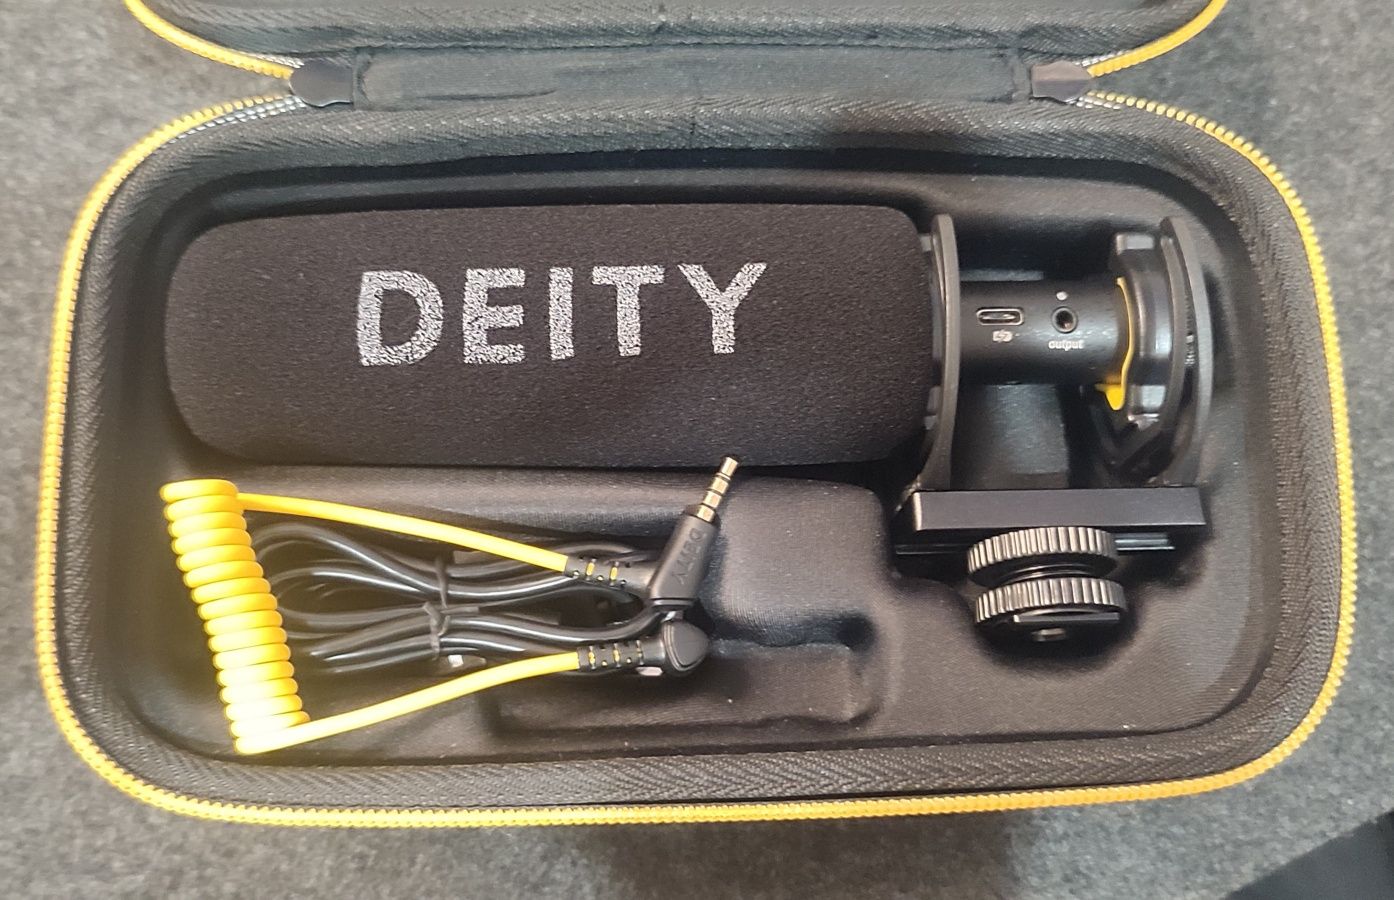 Microfon shotgun Deity V-Mic D3 PRO Supercardioid pentru aparate DSLR